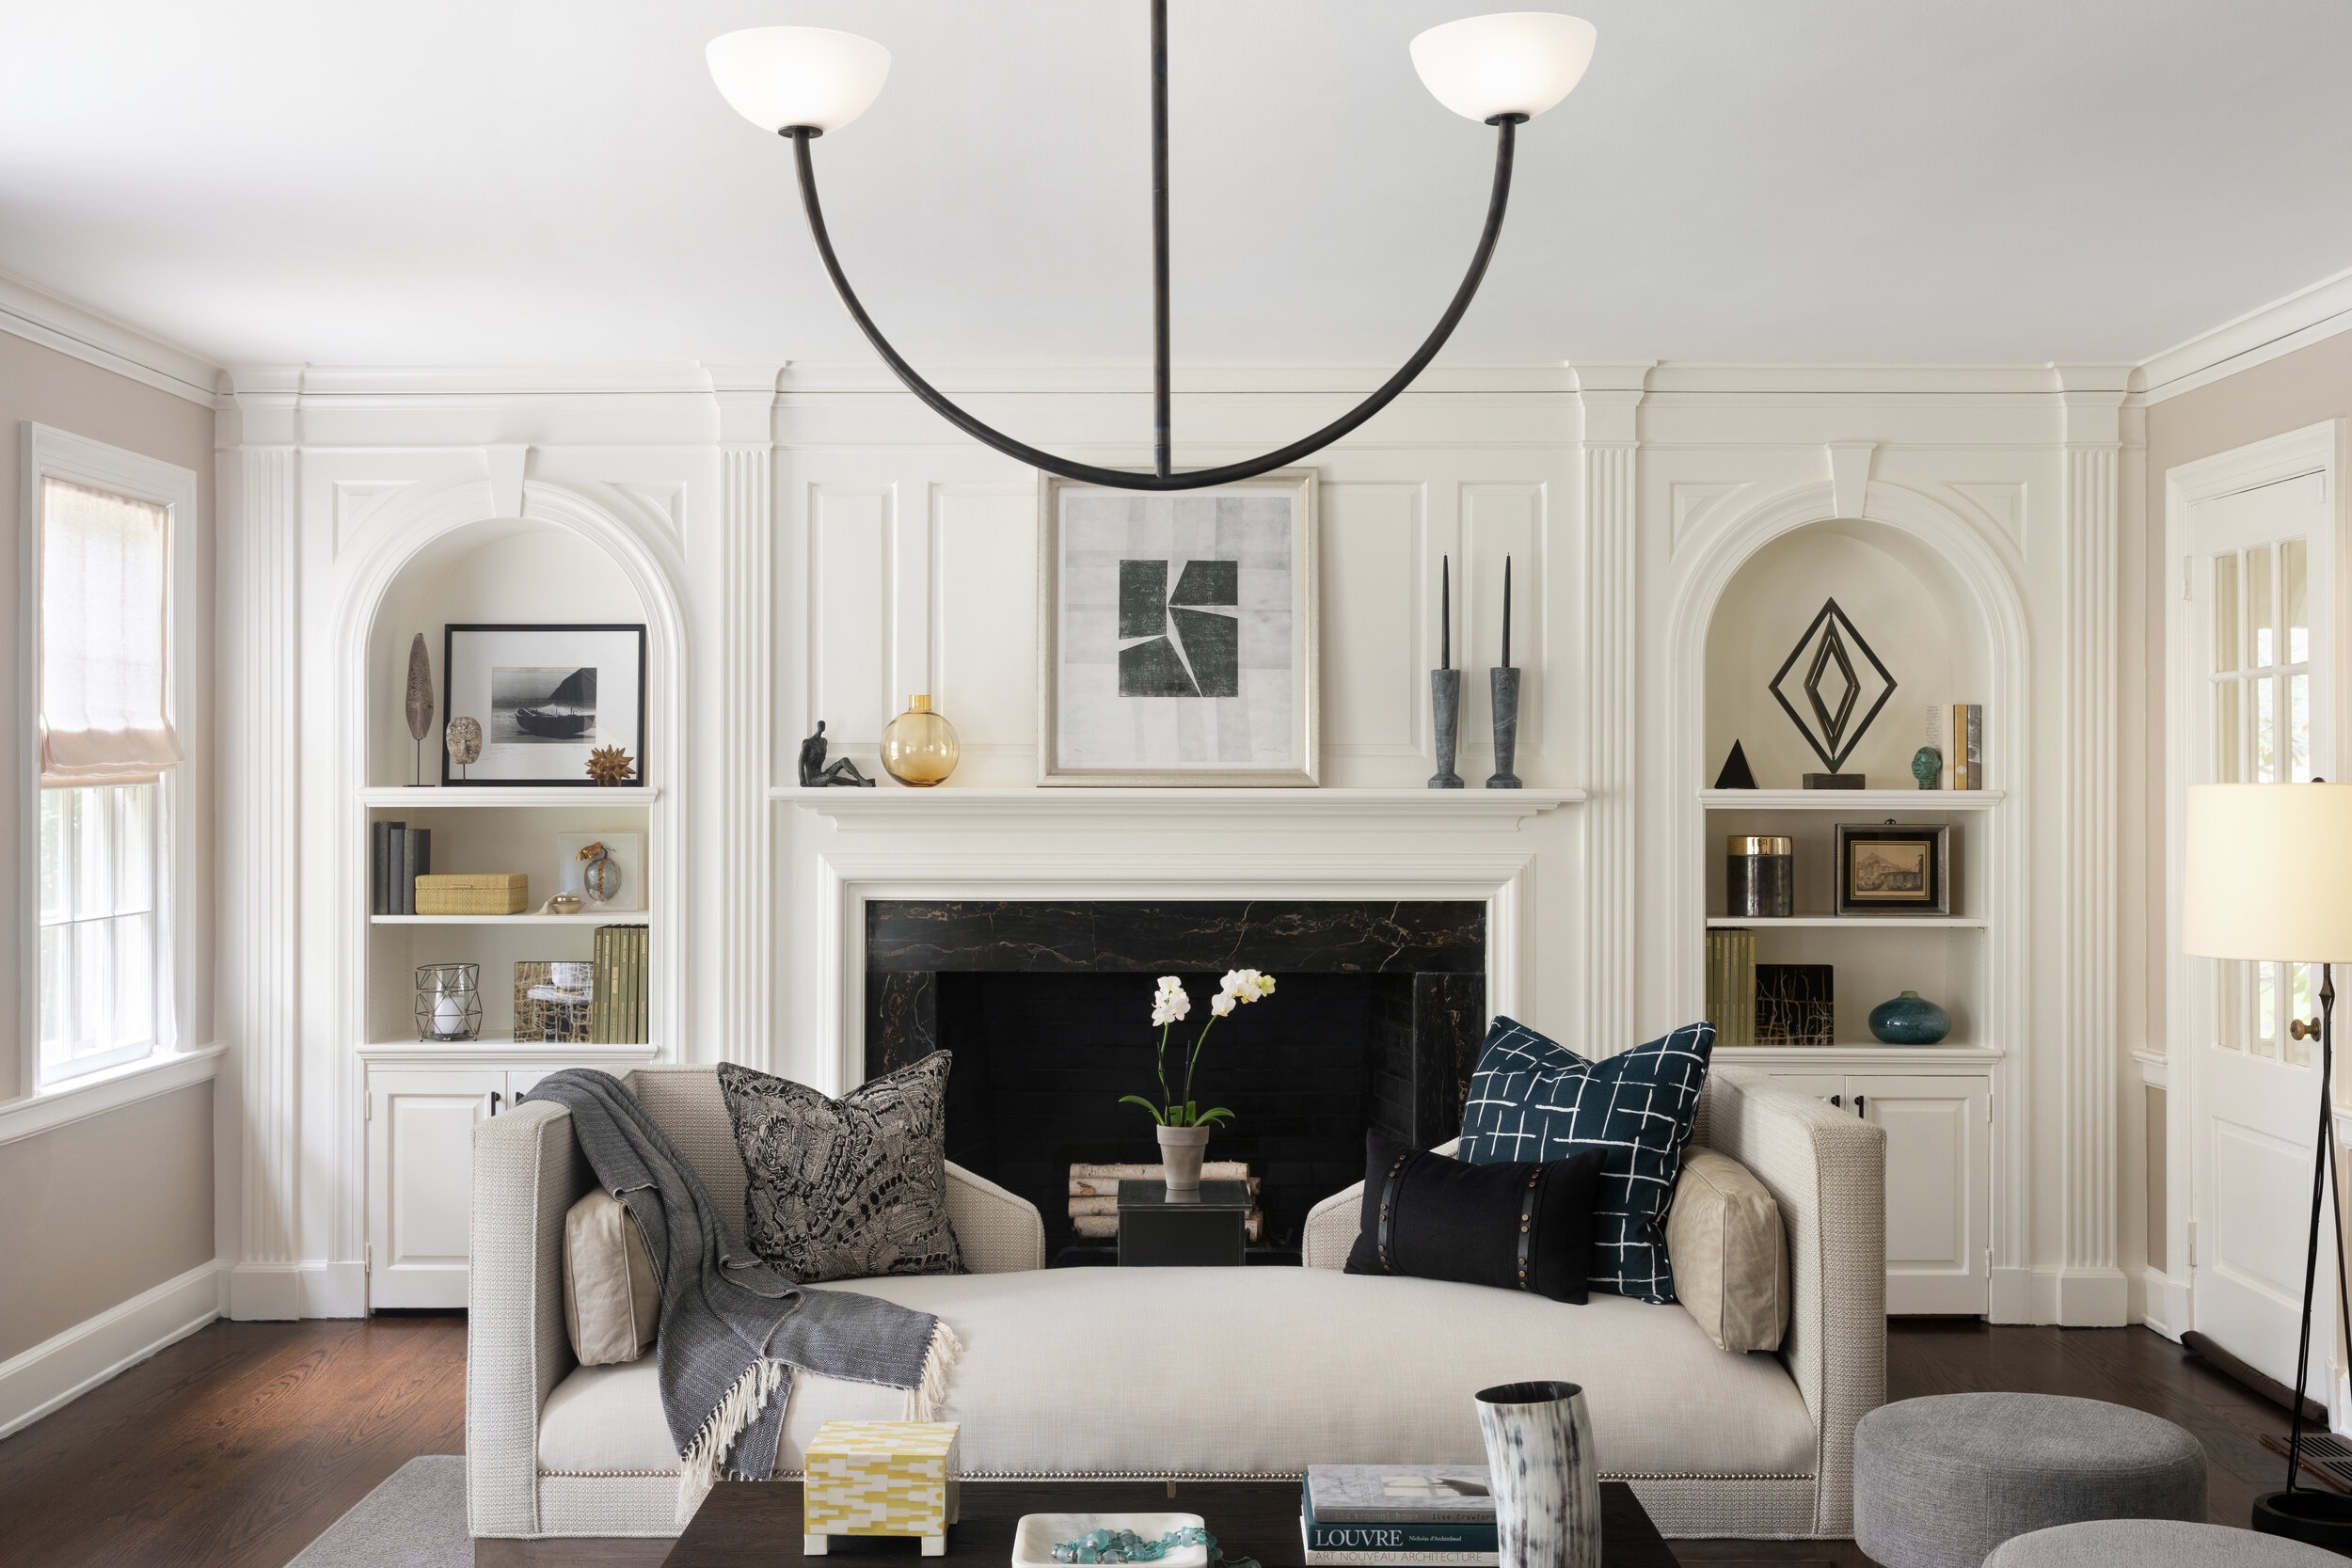 KAM DESIGN_Larchmont_NY_Living Room_Fireplace_Ceiling Light_6854 _2019.jpg